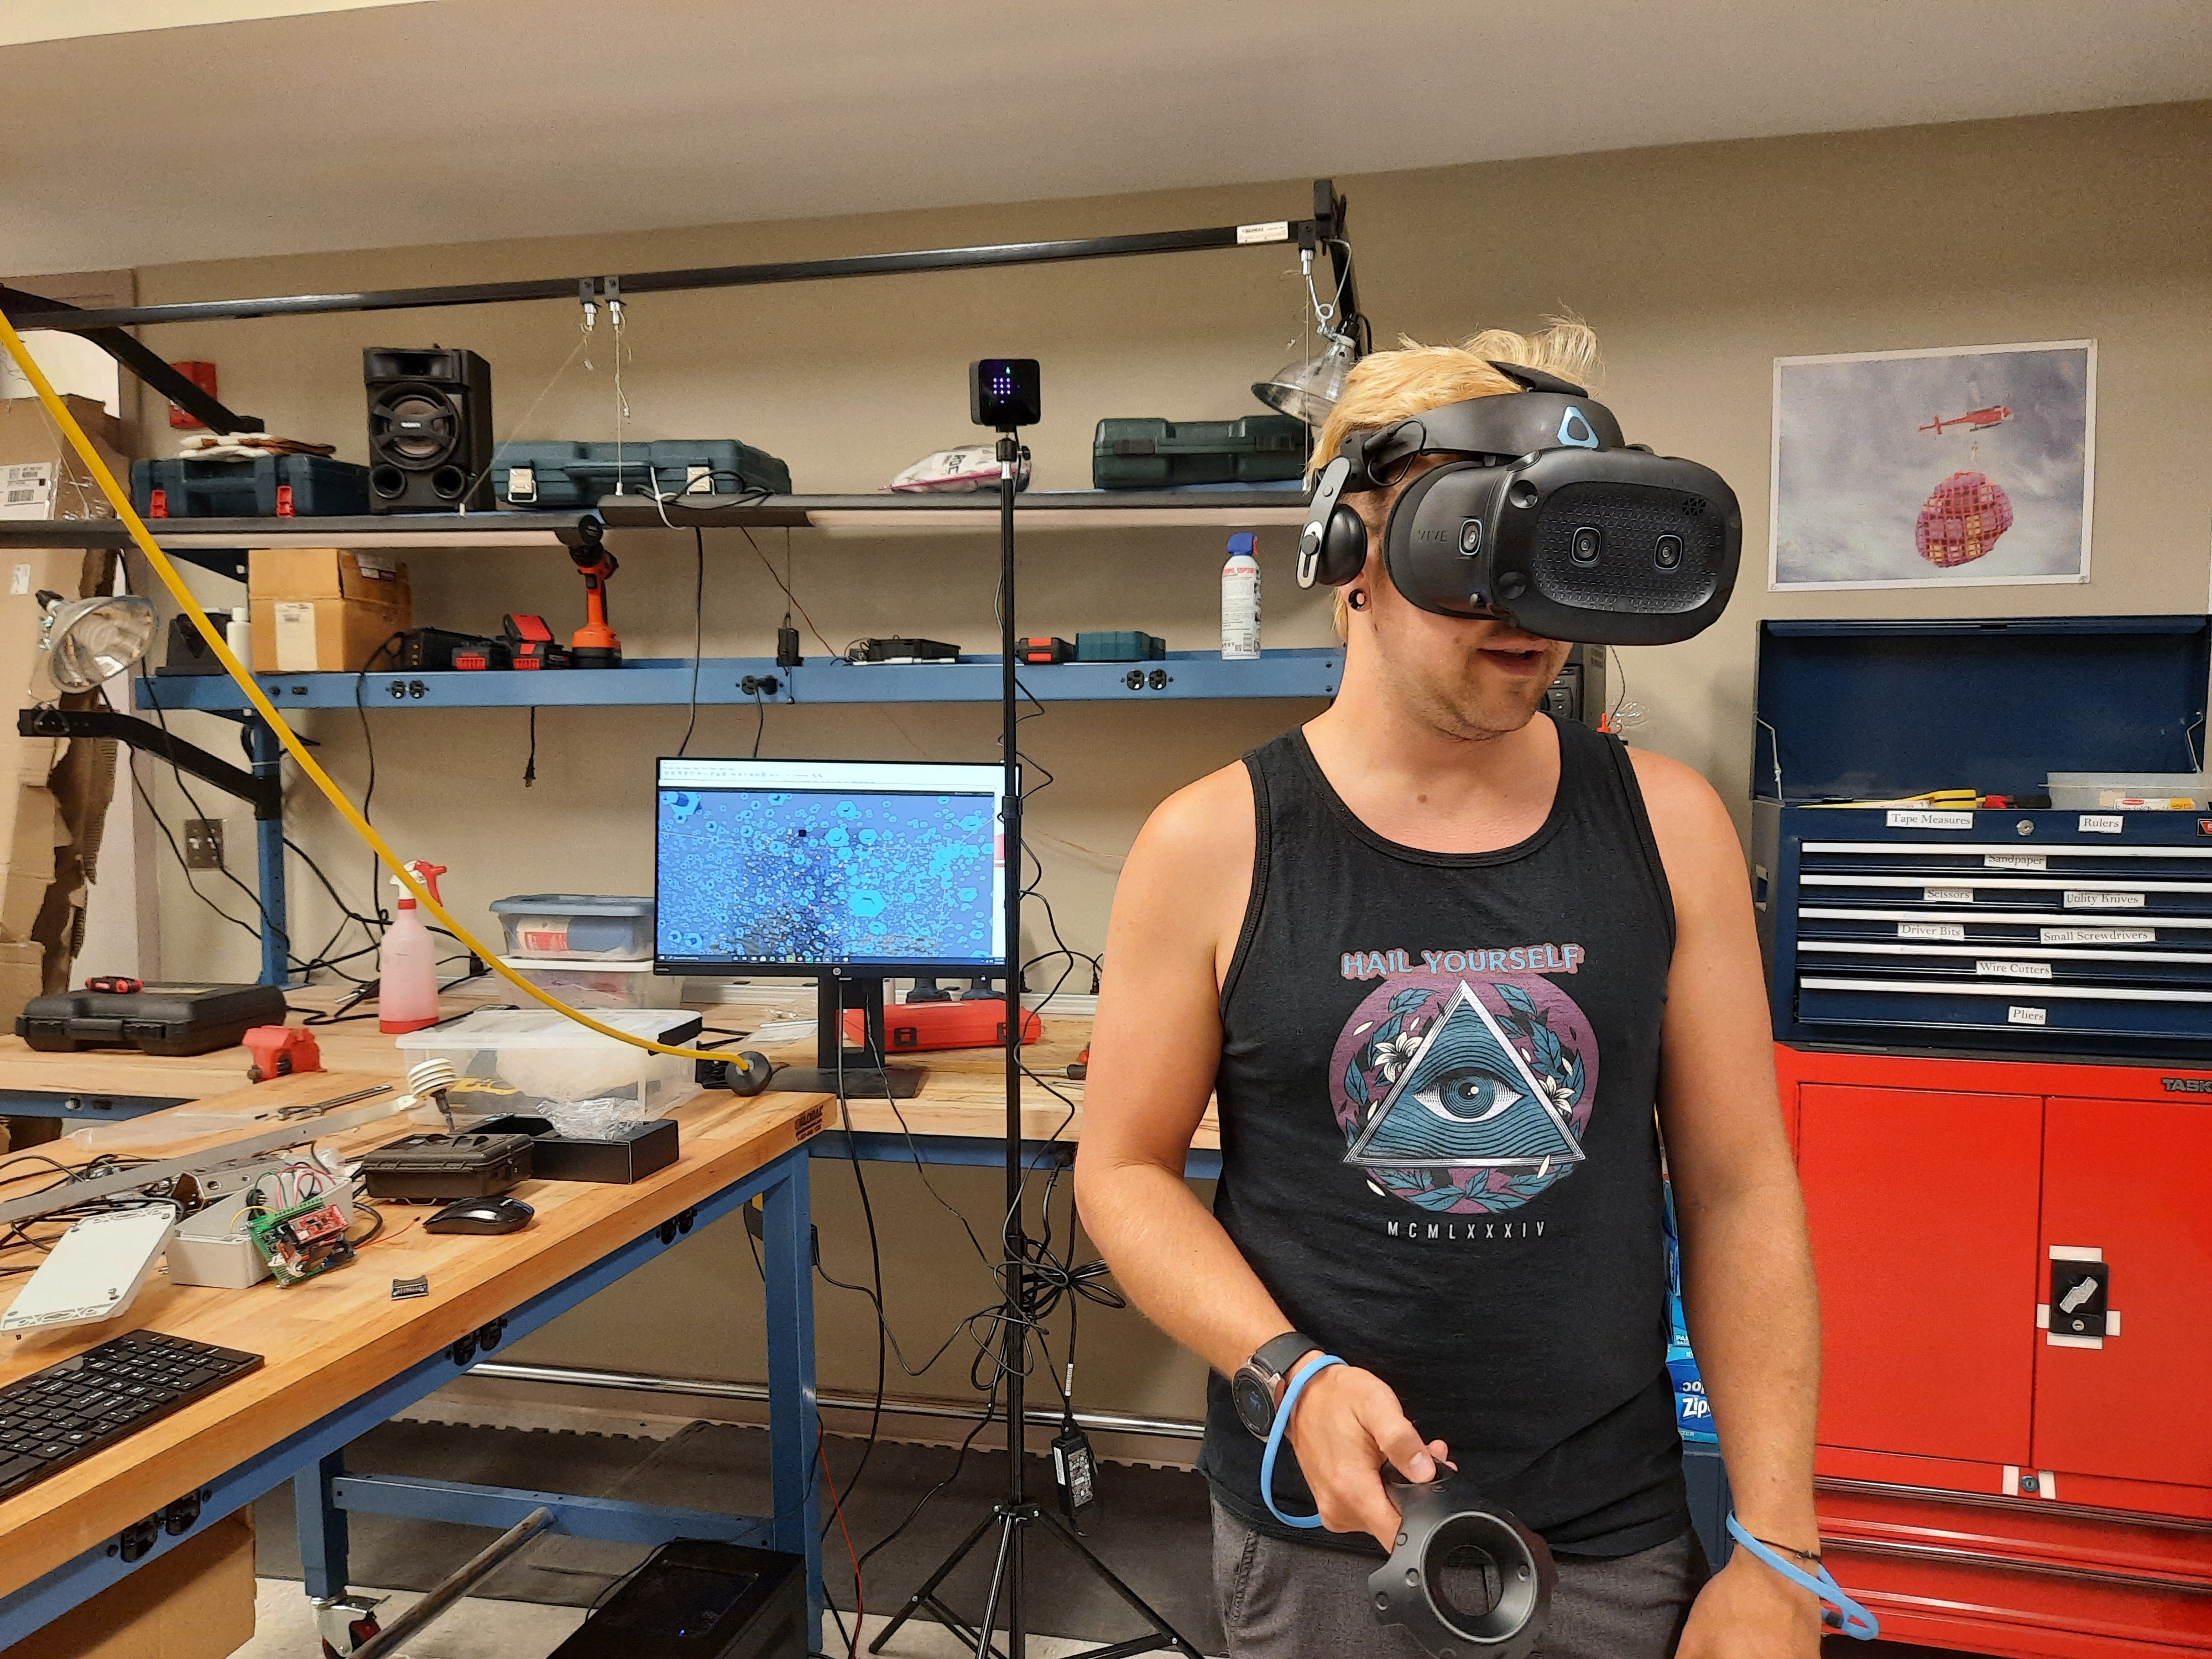 Student using VR